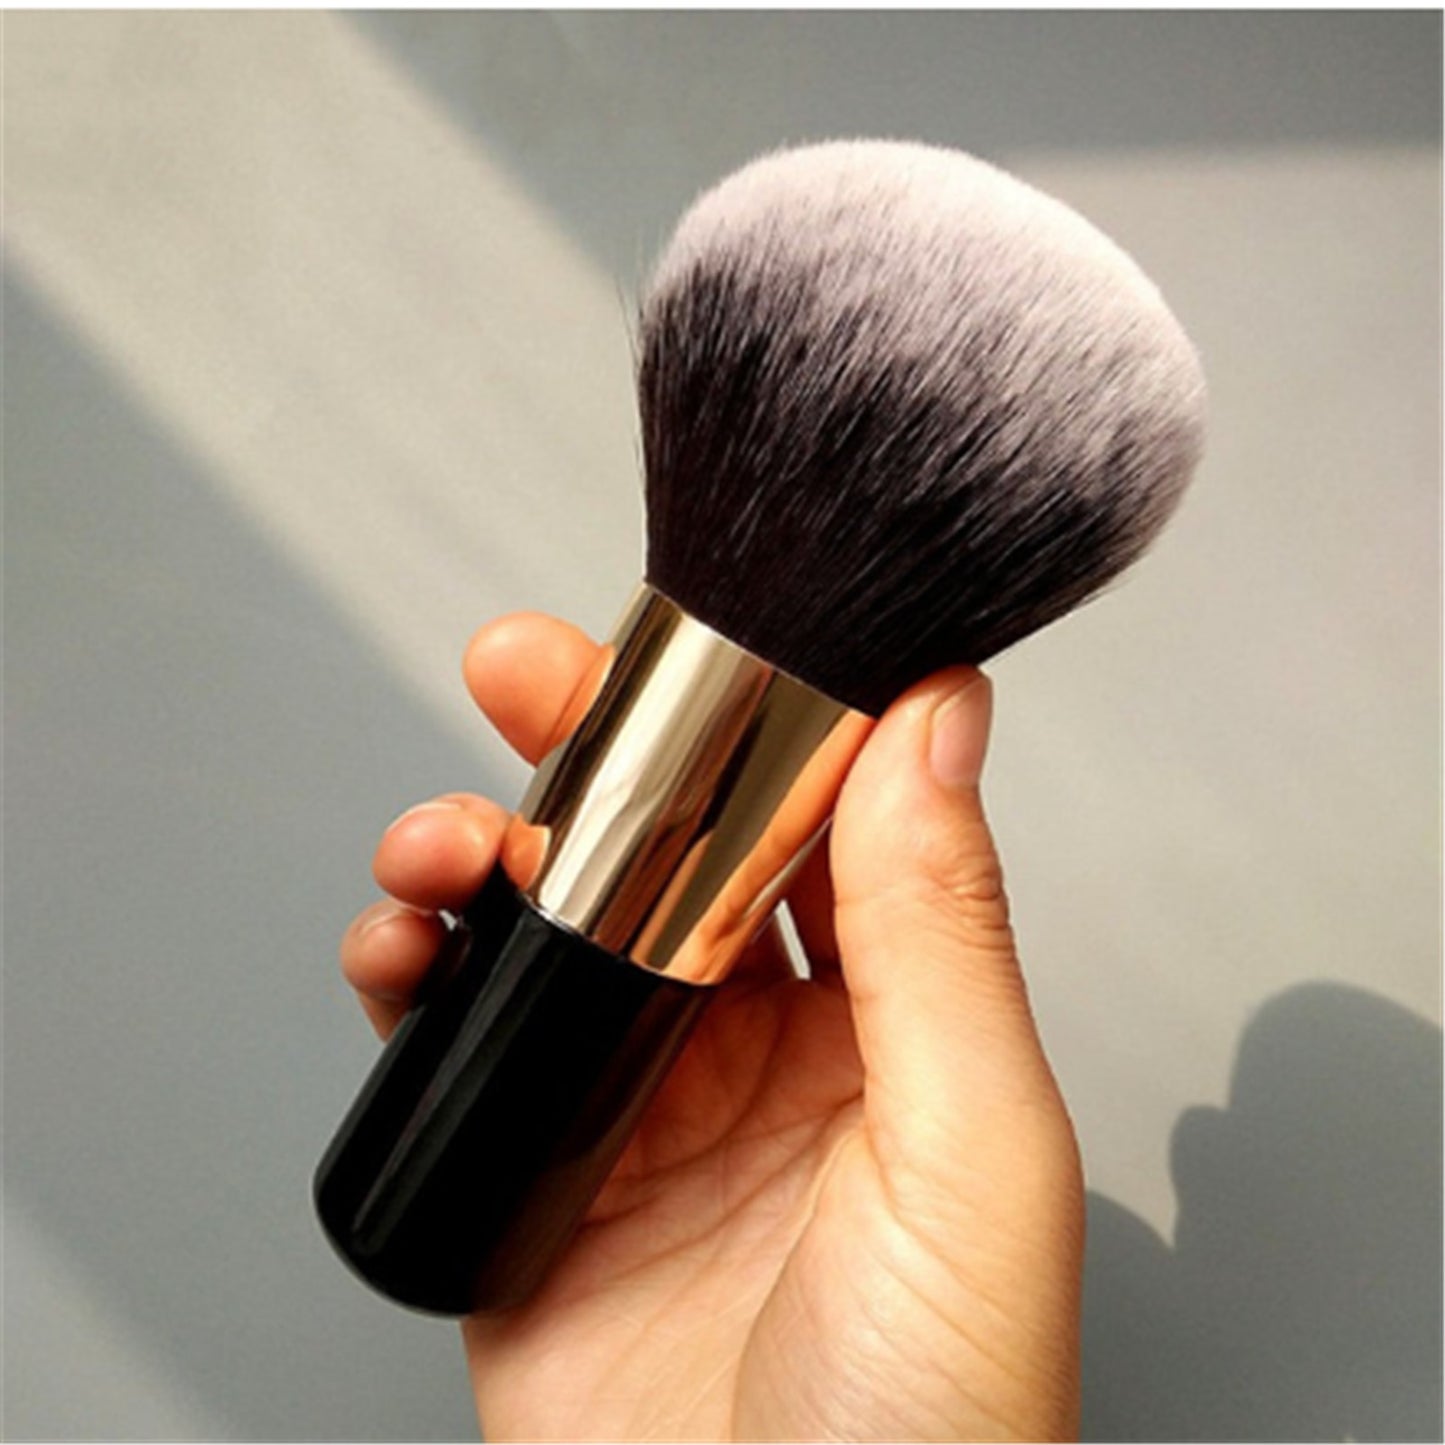 New Pro Large Size Makeup Brush For Loose Powder Foundation Powder Blush Highlighter Brush Soft Hair Cosmetics Lady Make Up Tool